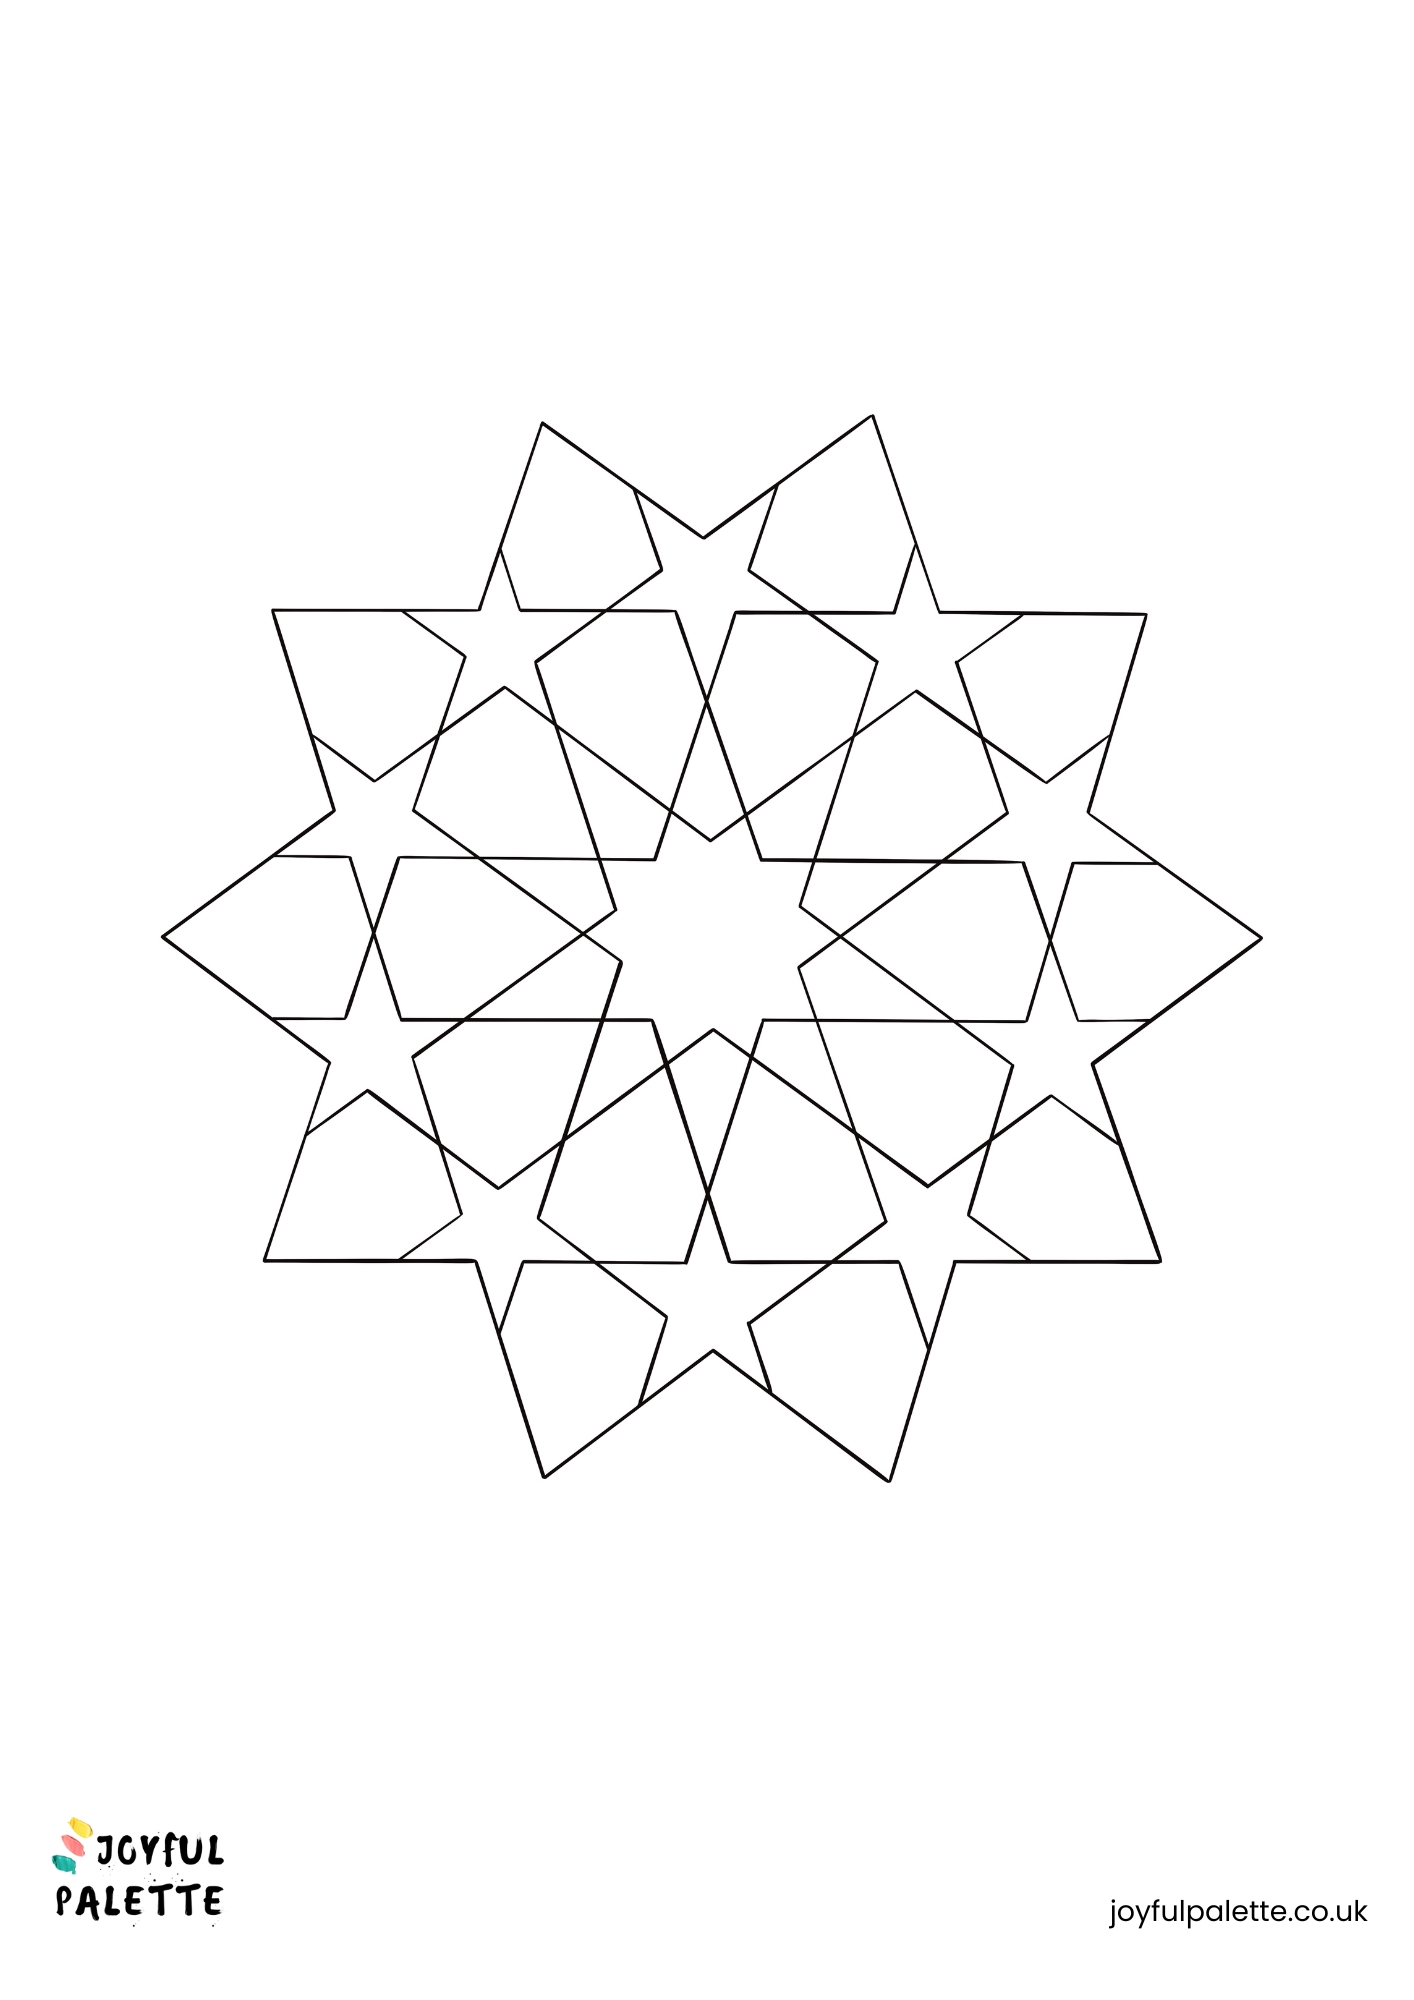 islamic geometric pattern